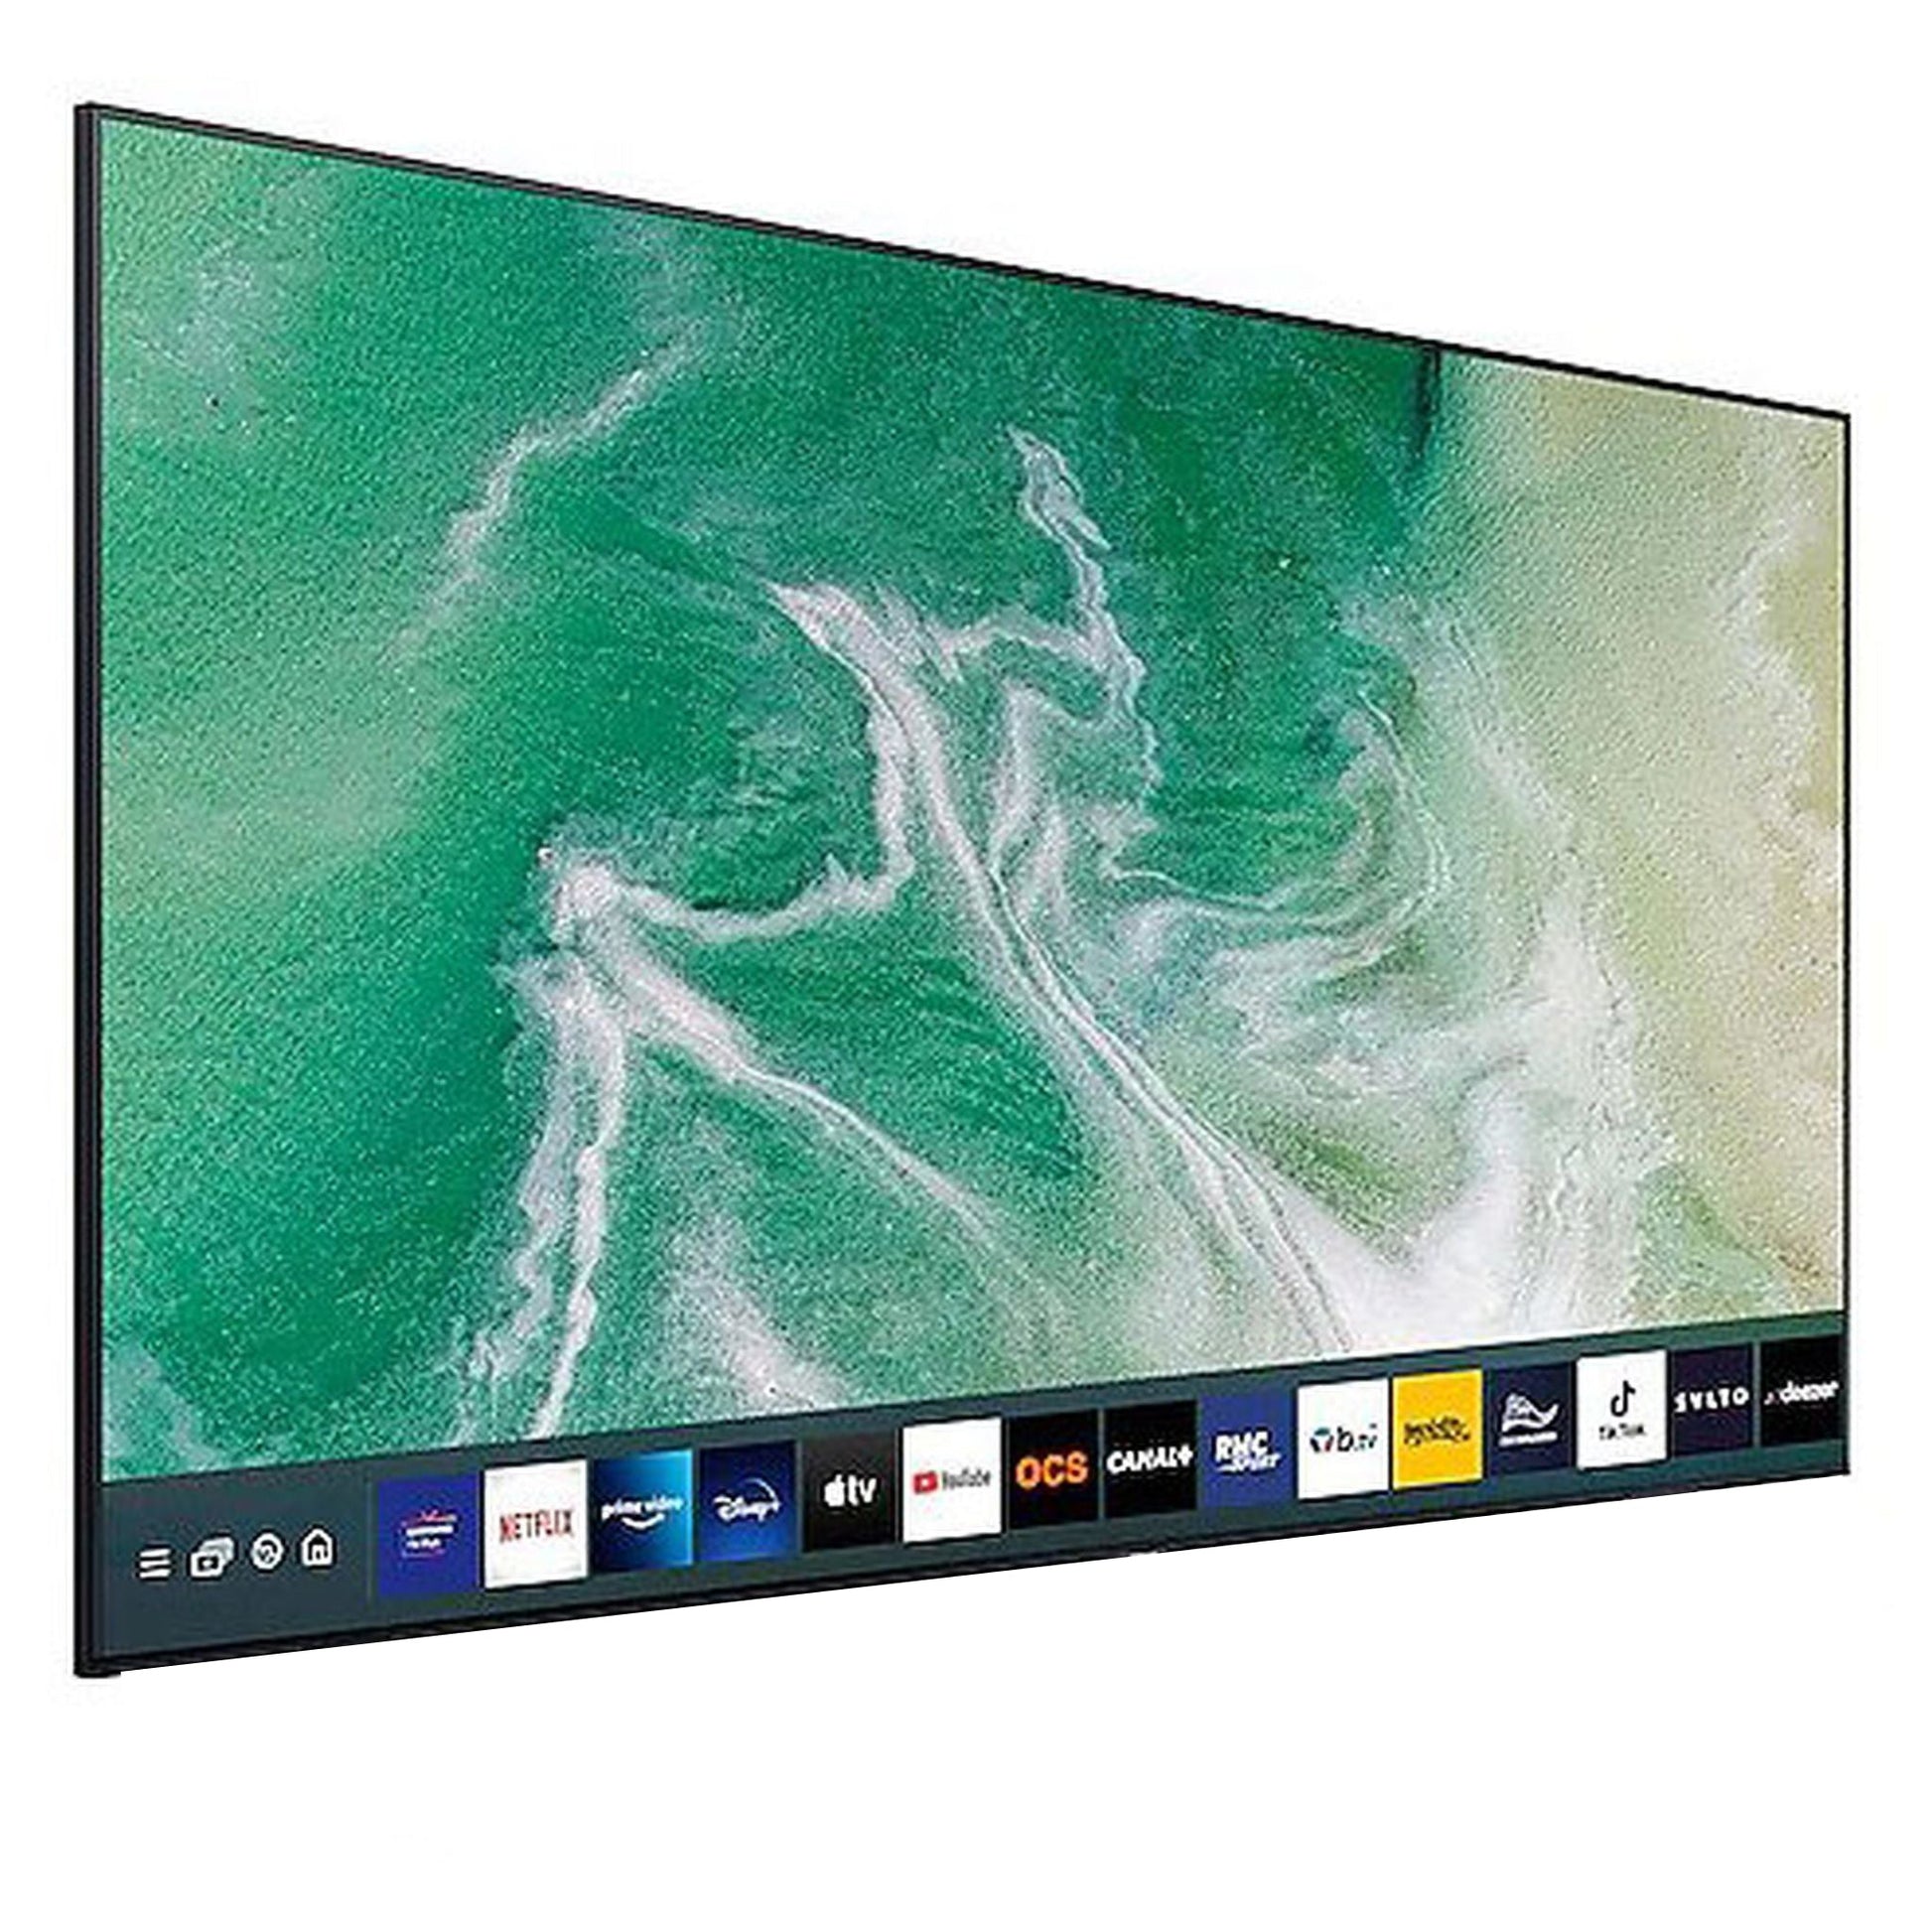 Samsung 58 inch Smart TV, 58TU7000